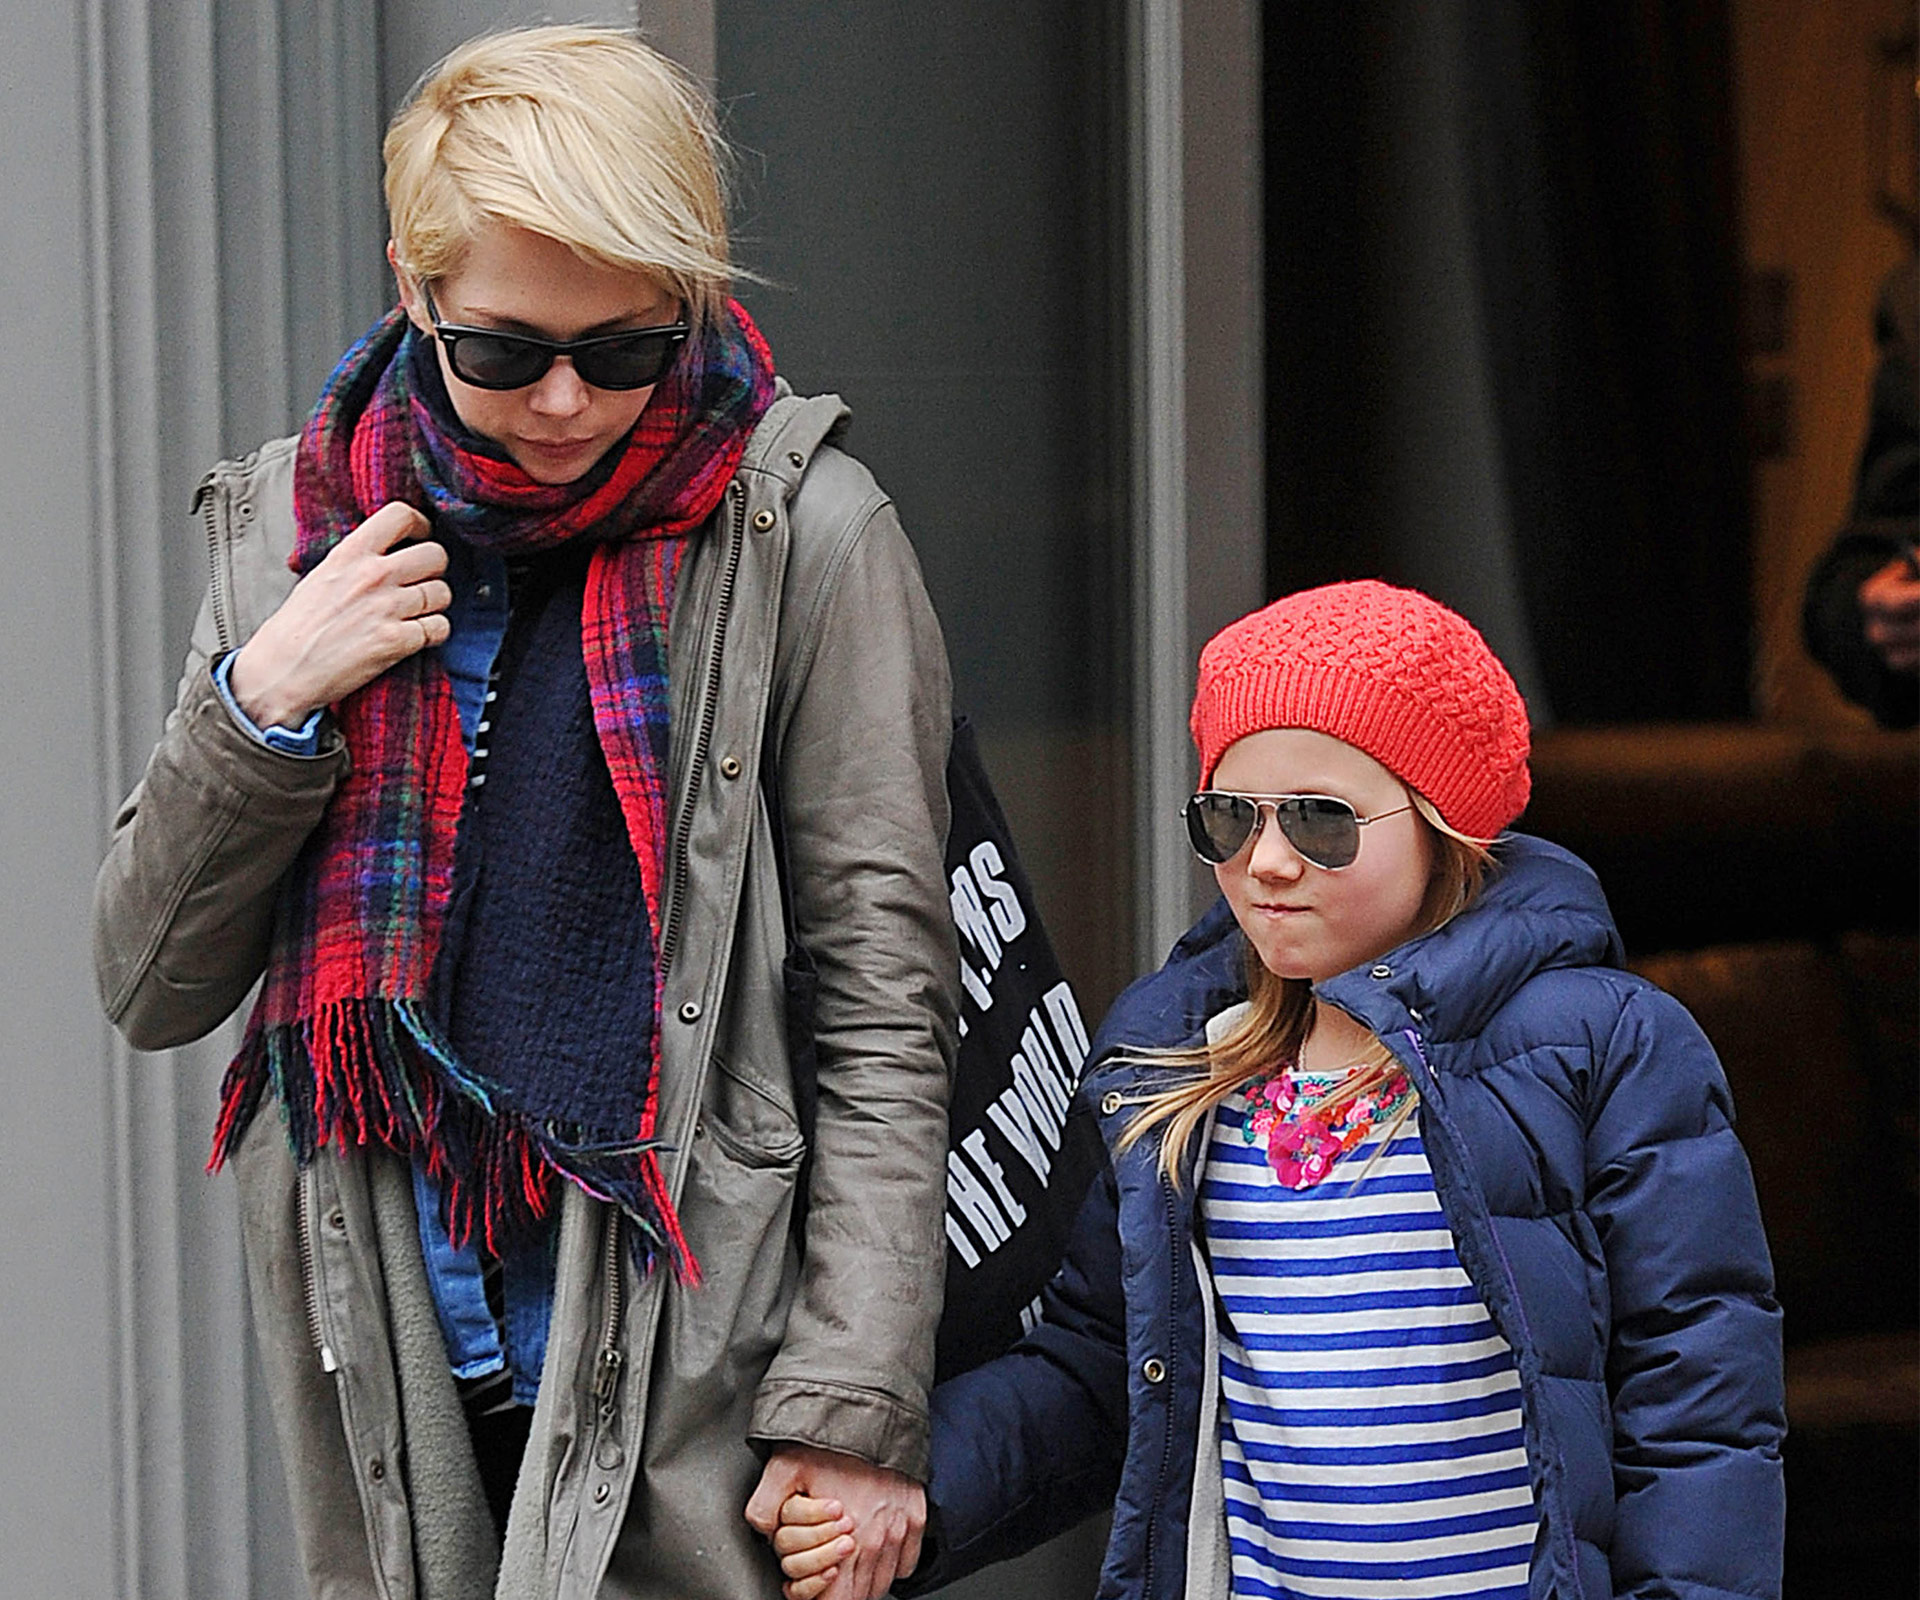 Heath Ledger’s sister praises Michelle Williams parenting with Matilda